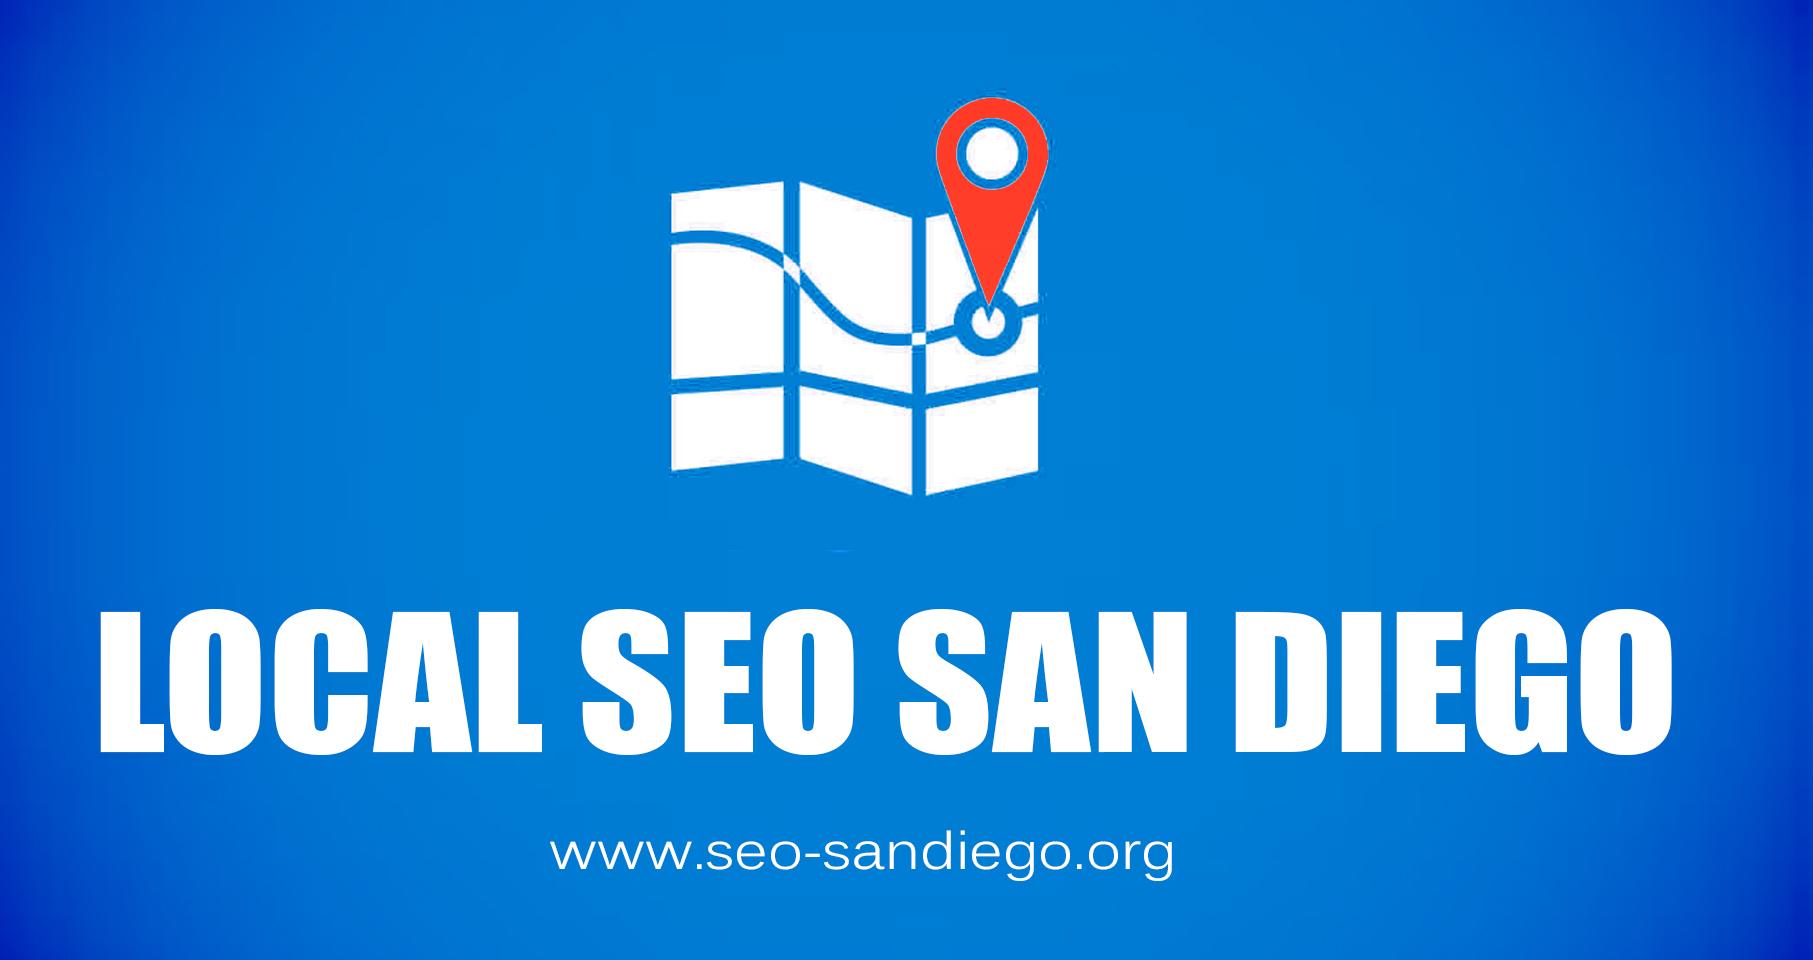 Local Seo San Diego